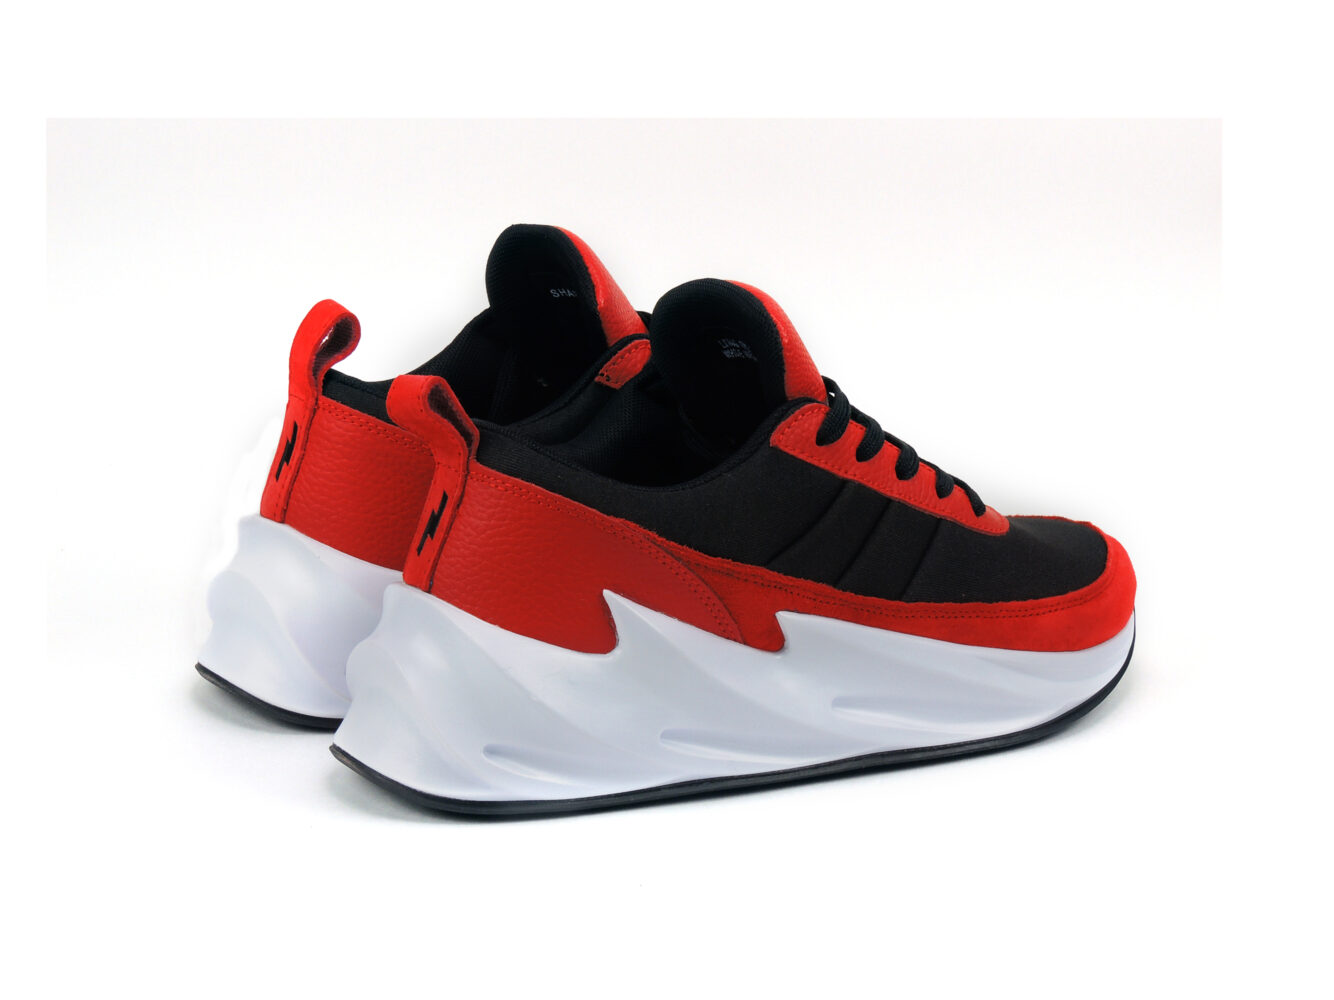 adidas sharks concept boost red black f33852 купить